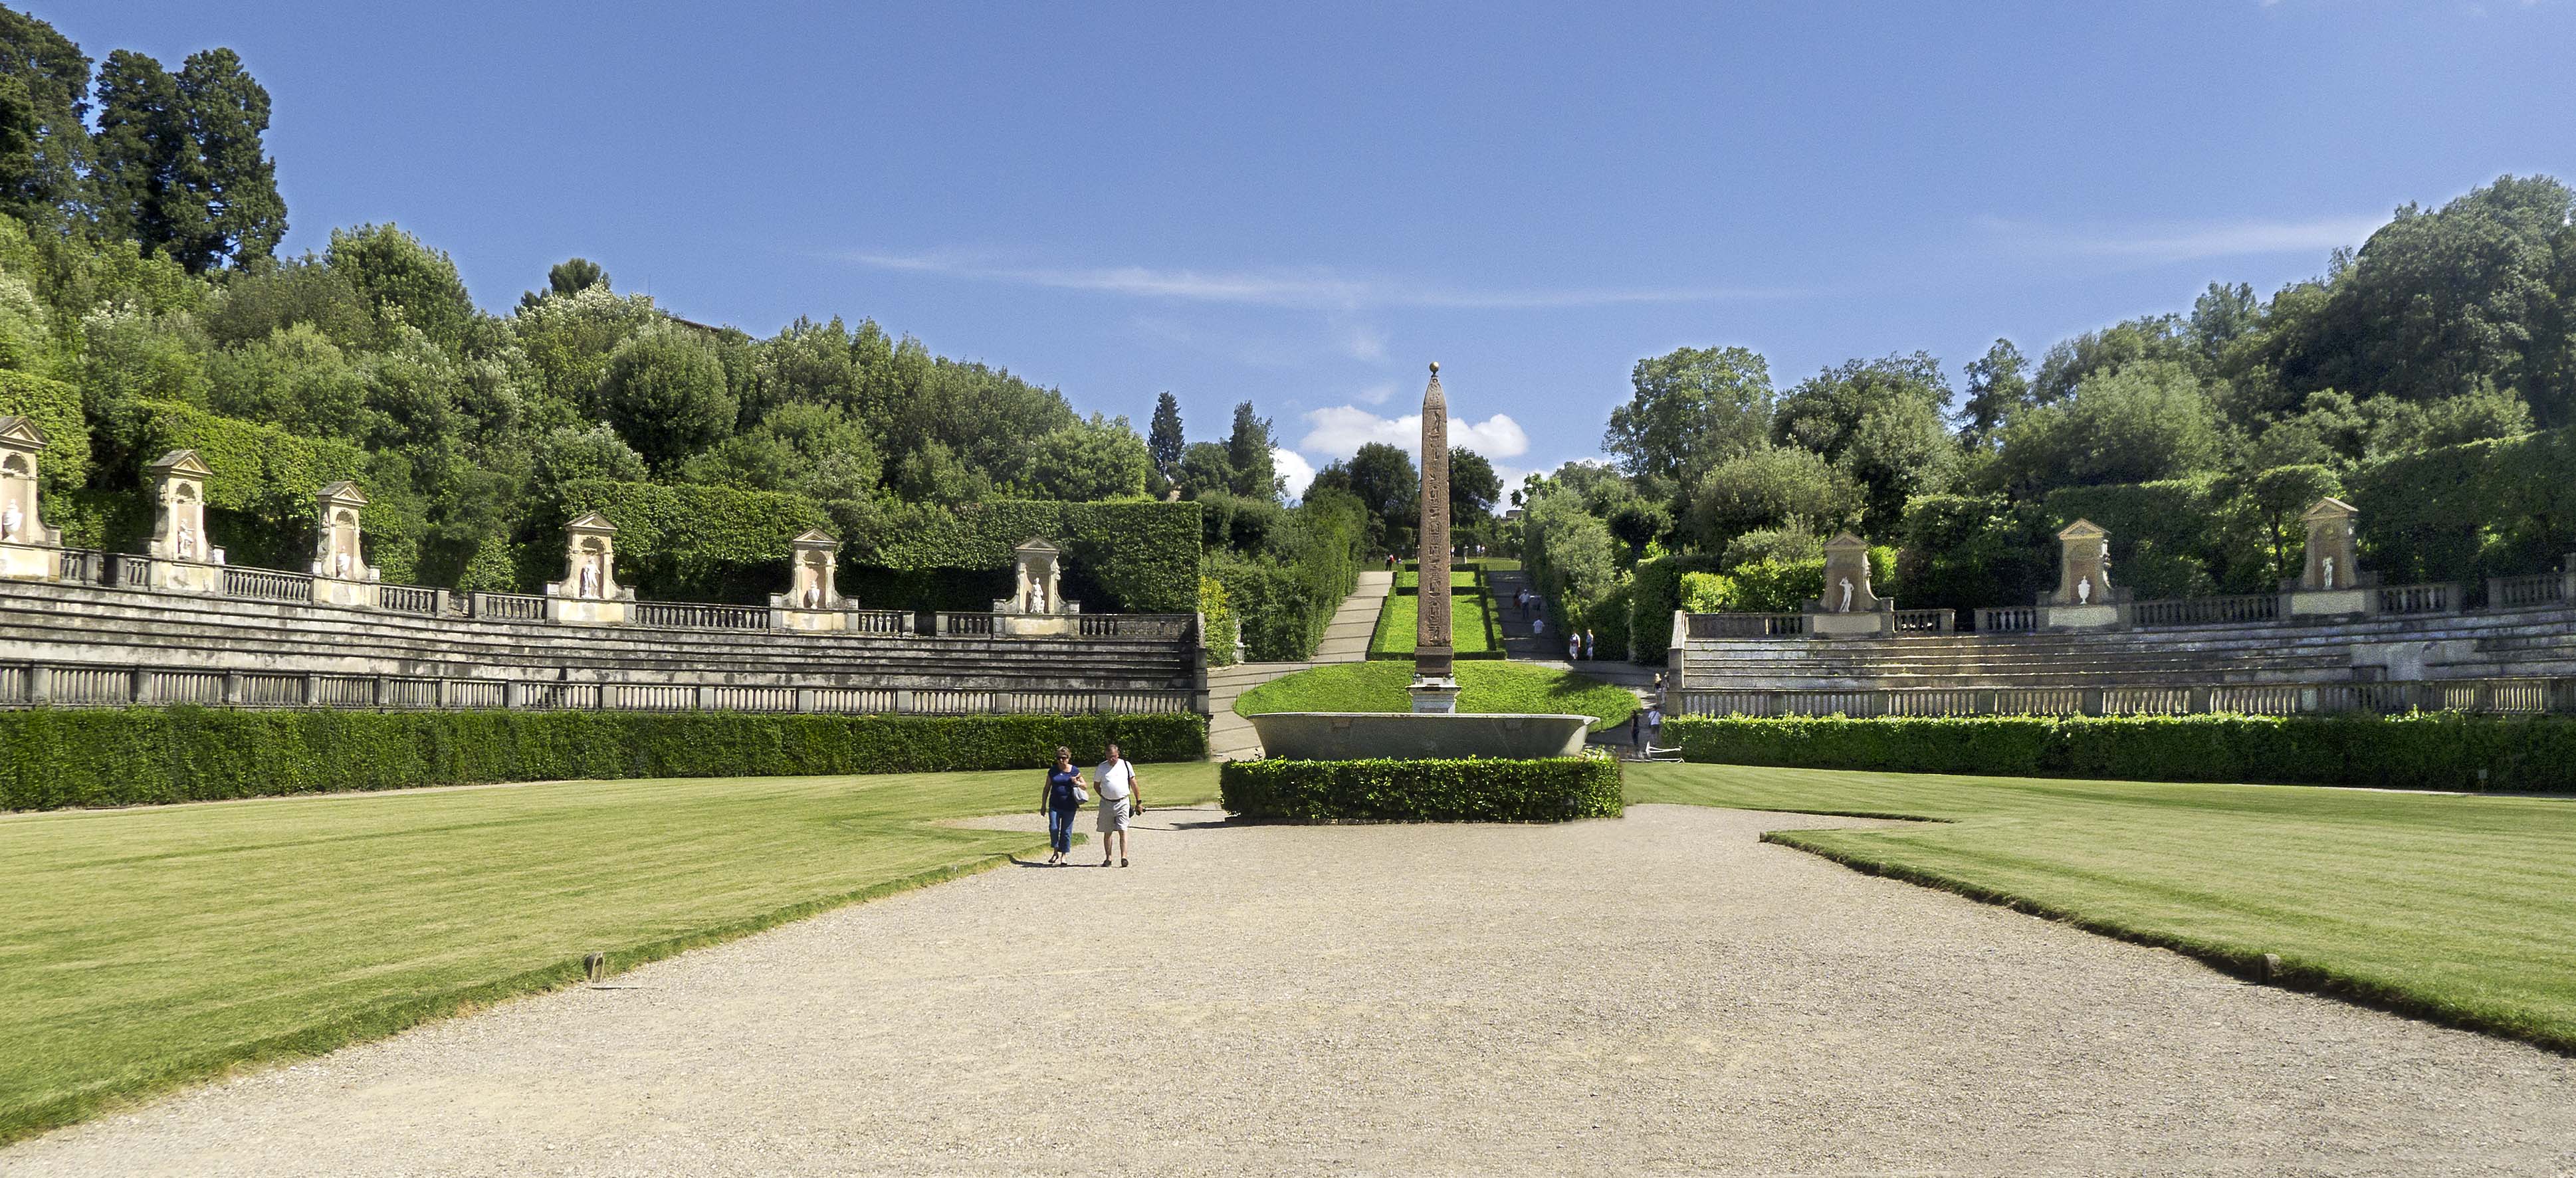 The Italian Renaissance Garden An Iconic Famous Gardens